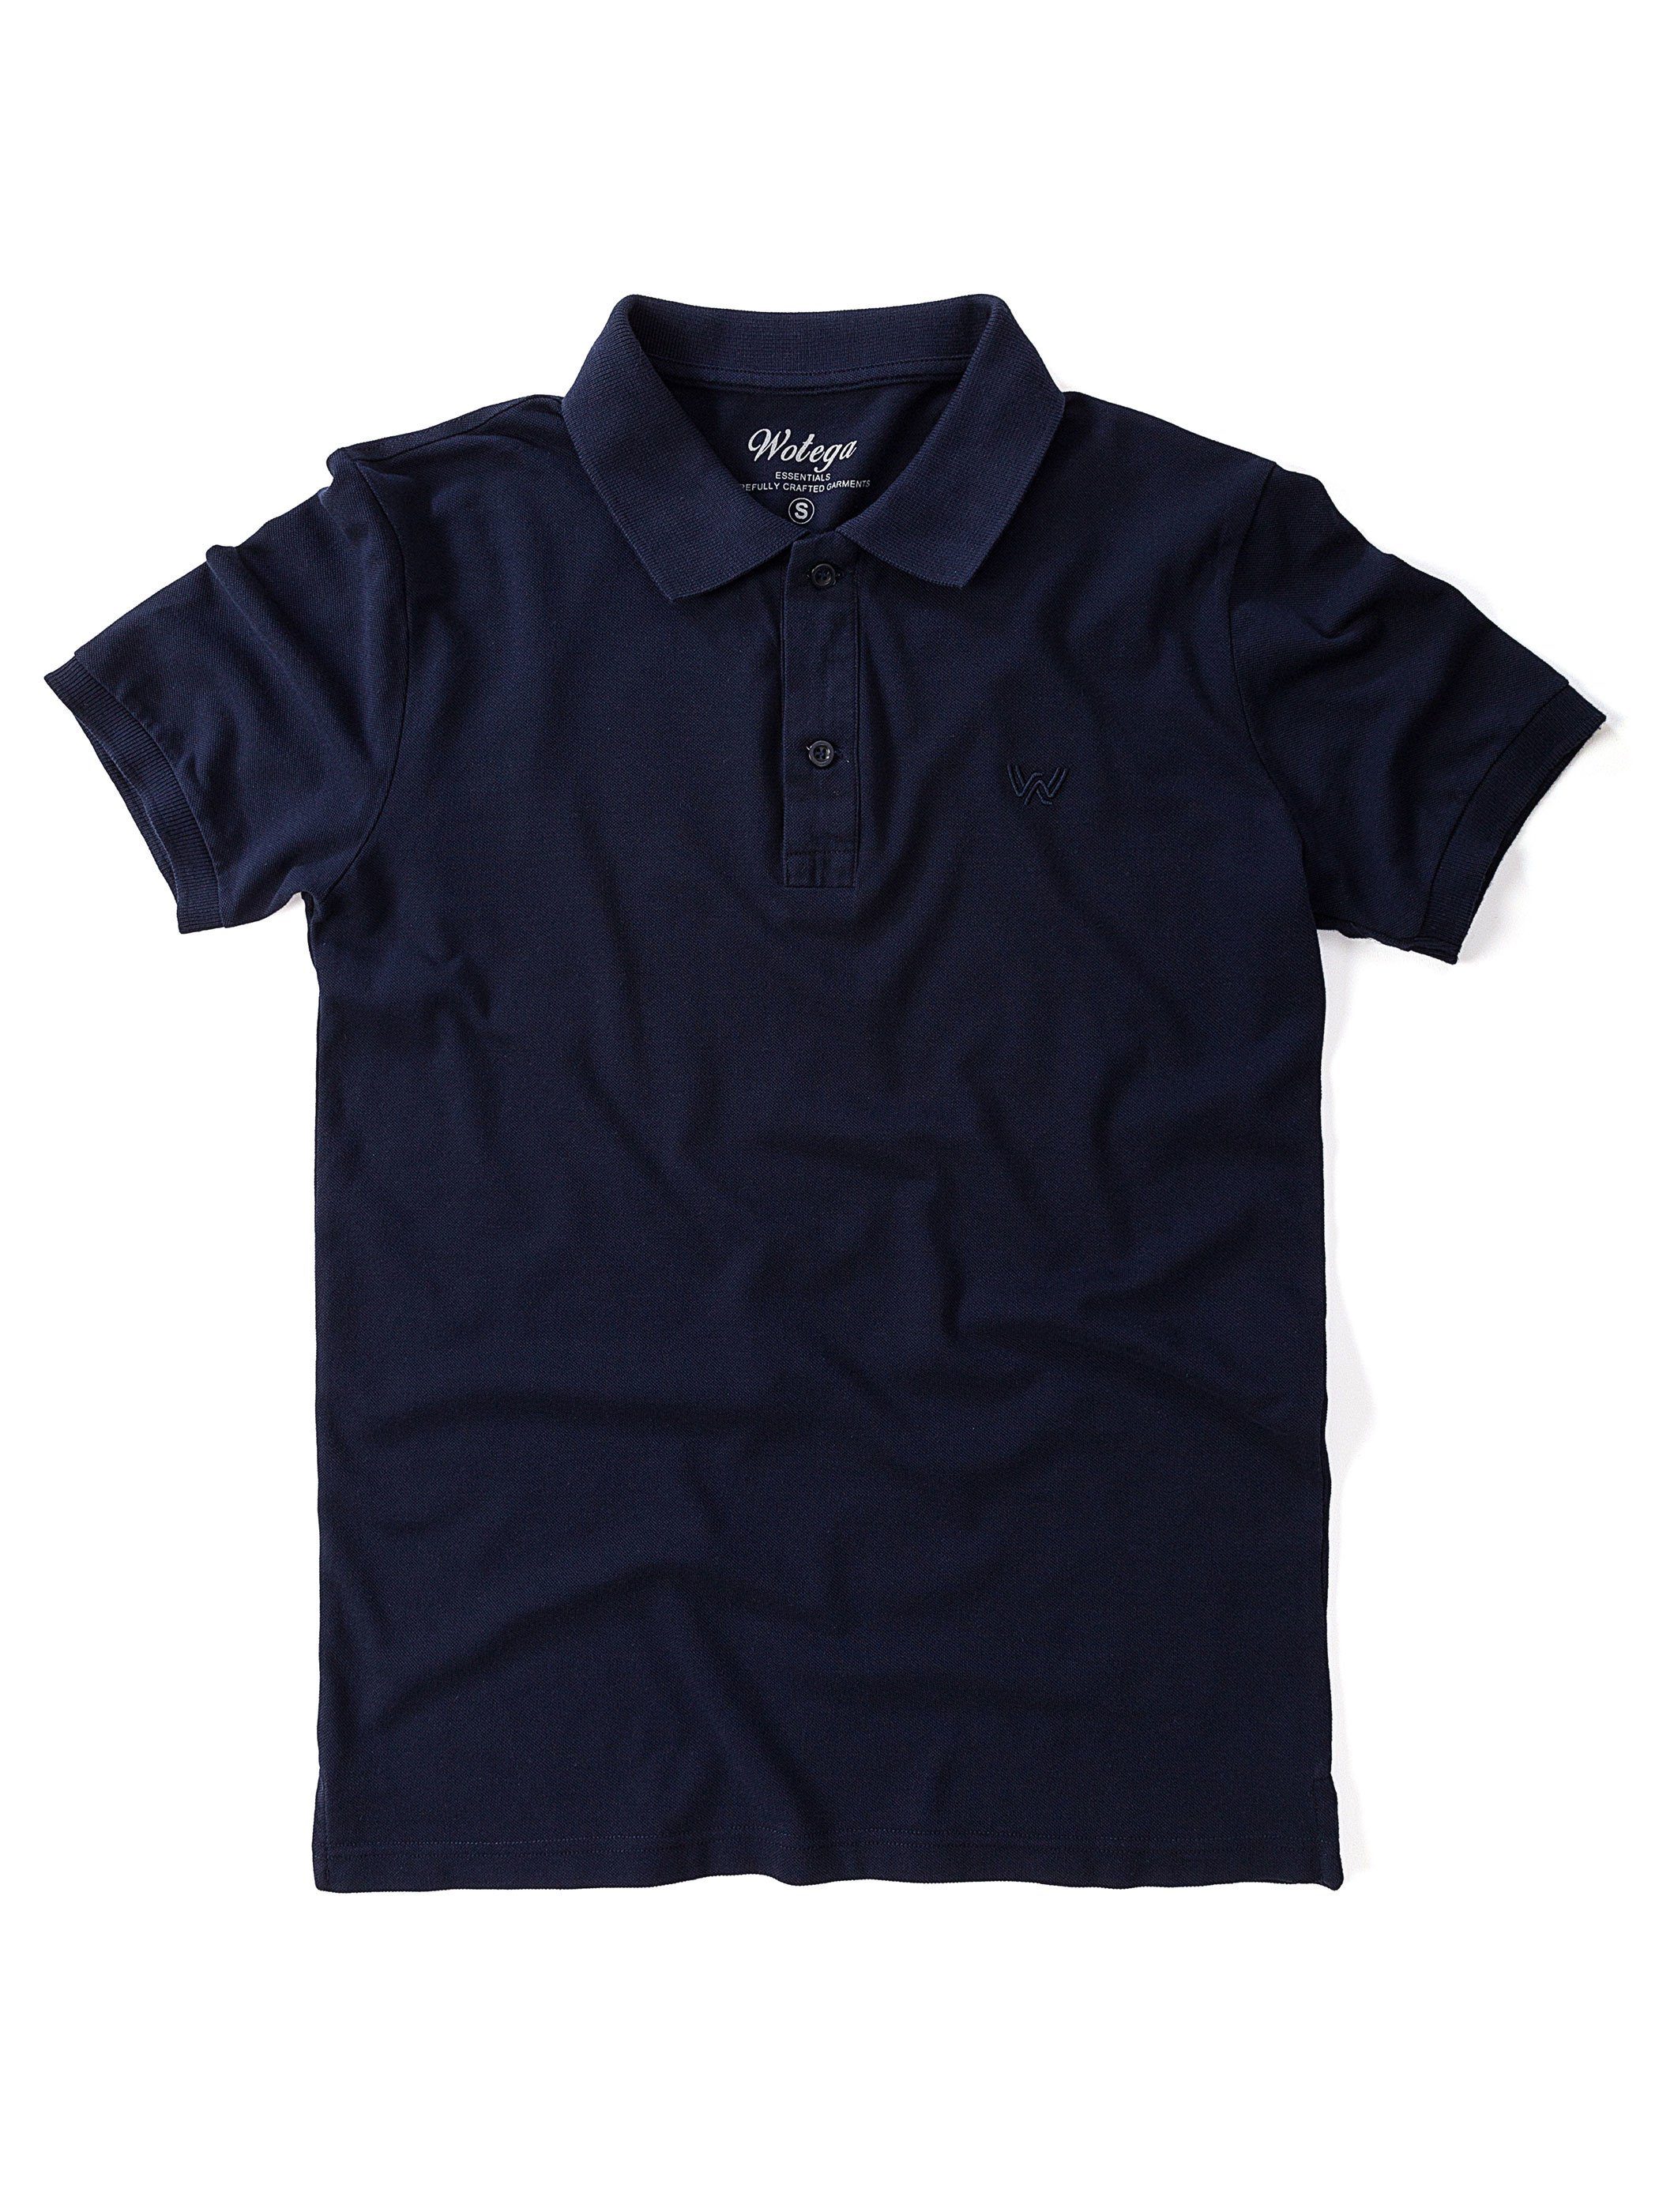 WOTEGA Poloshirt (navy (Set, 3-Pack 193923) Shirt 3er-Pack) blazer Blau Nova Polo